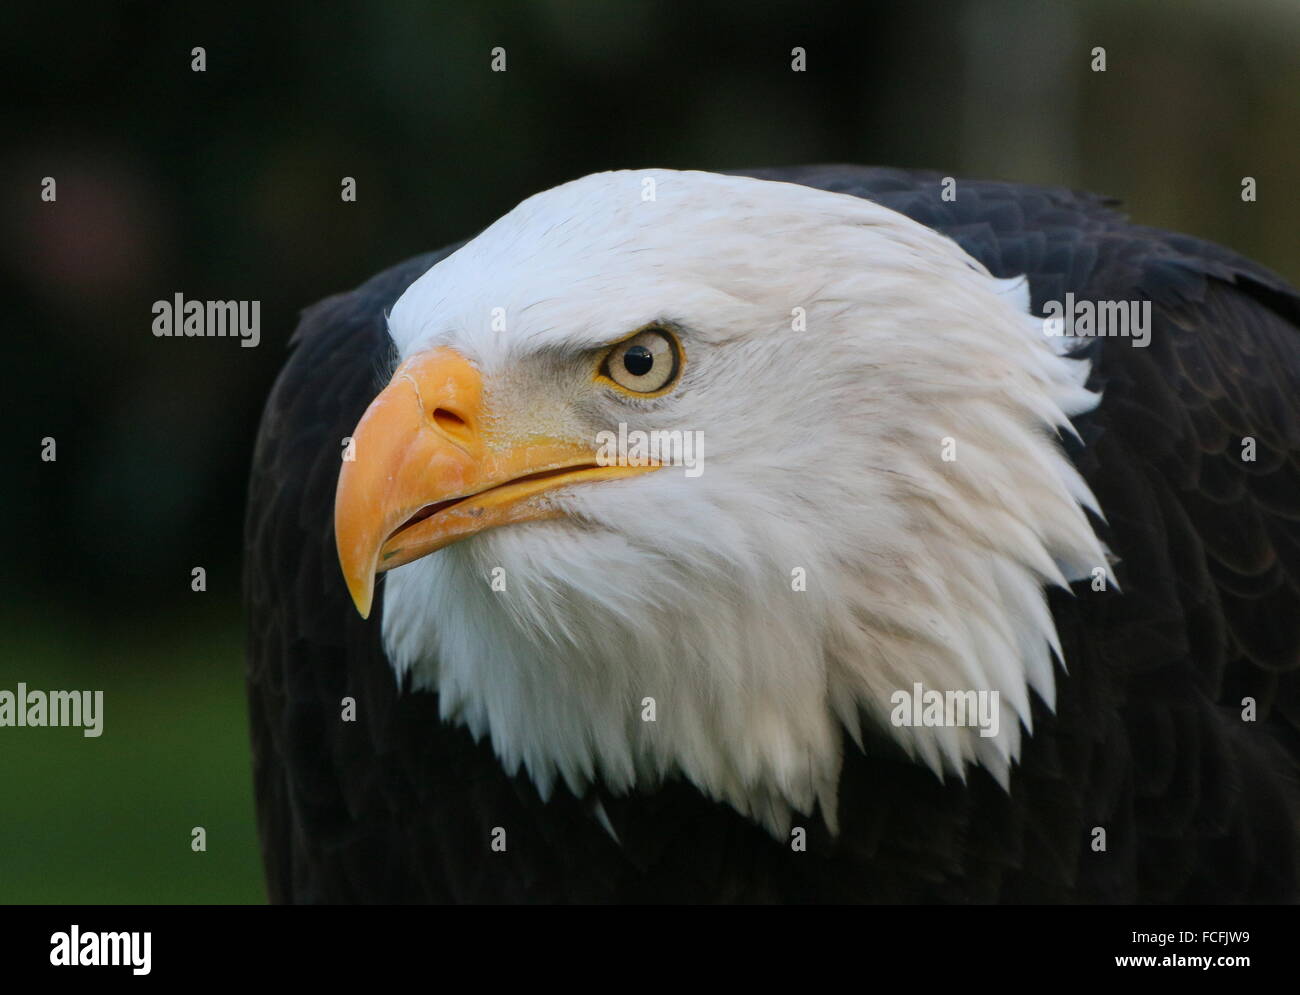 Mature North American Bald eagle (Haliaeetus leucocephalus), close-up of the head Stock Photo